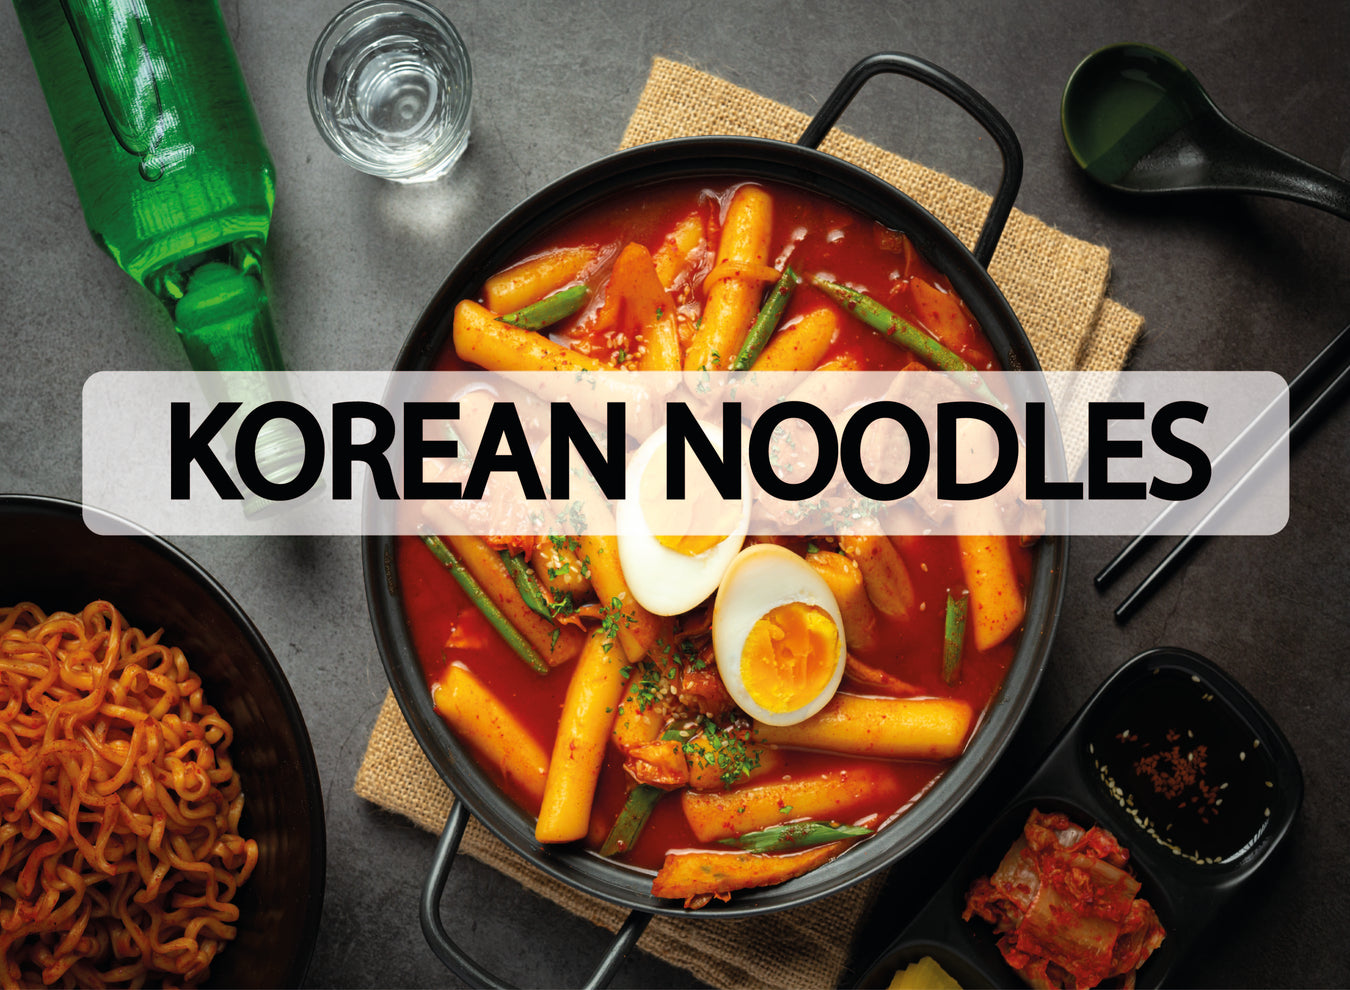 KOREAN NOODLES